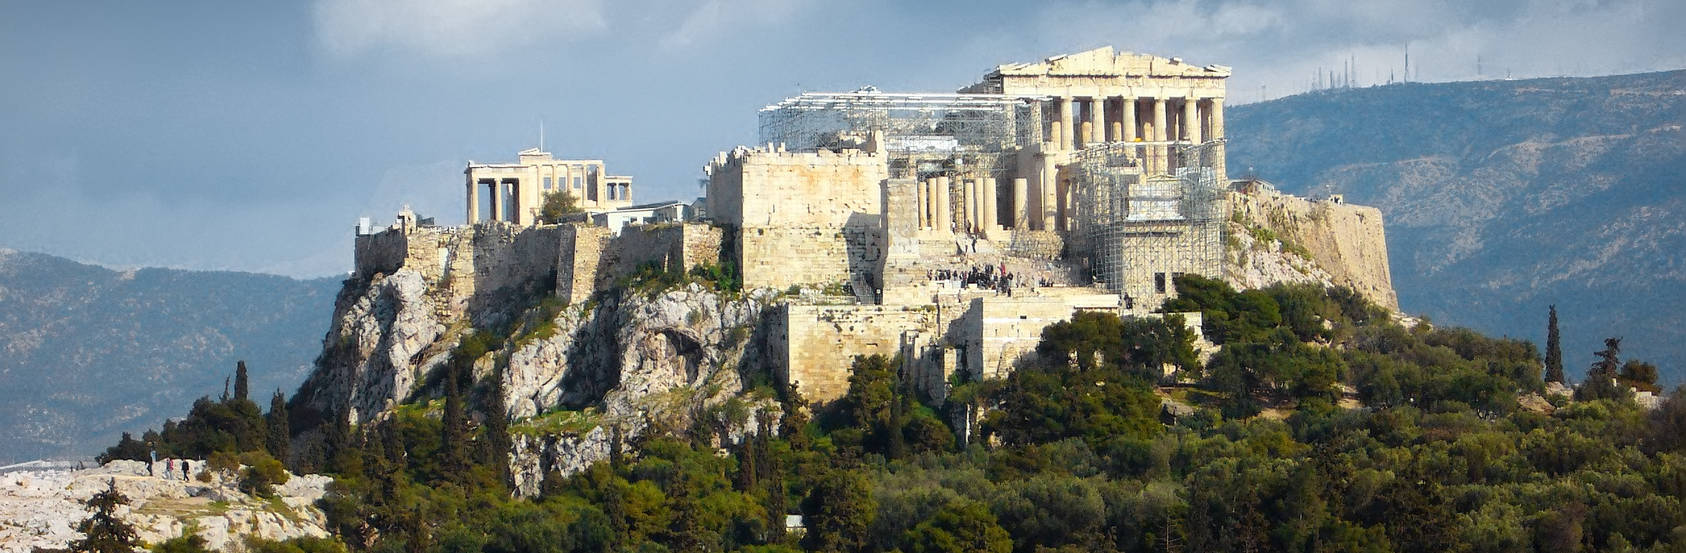 Athene-Acropolis-Fotolia_4016606_M.jpg